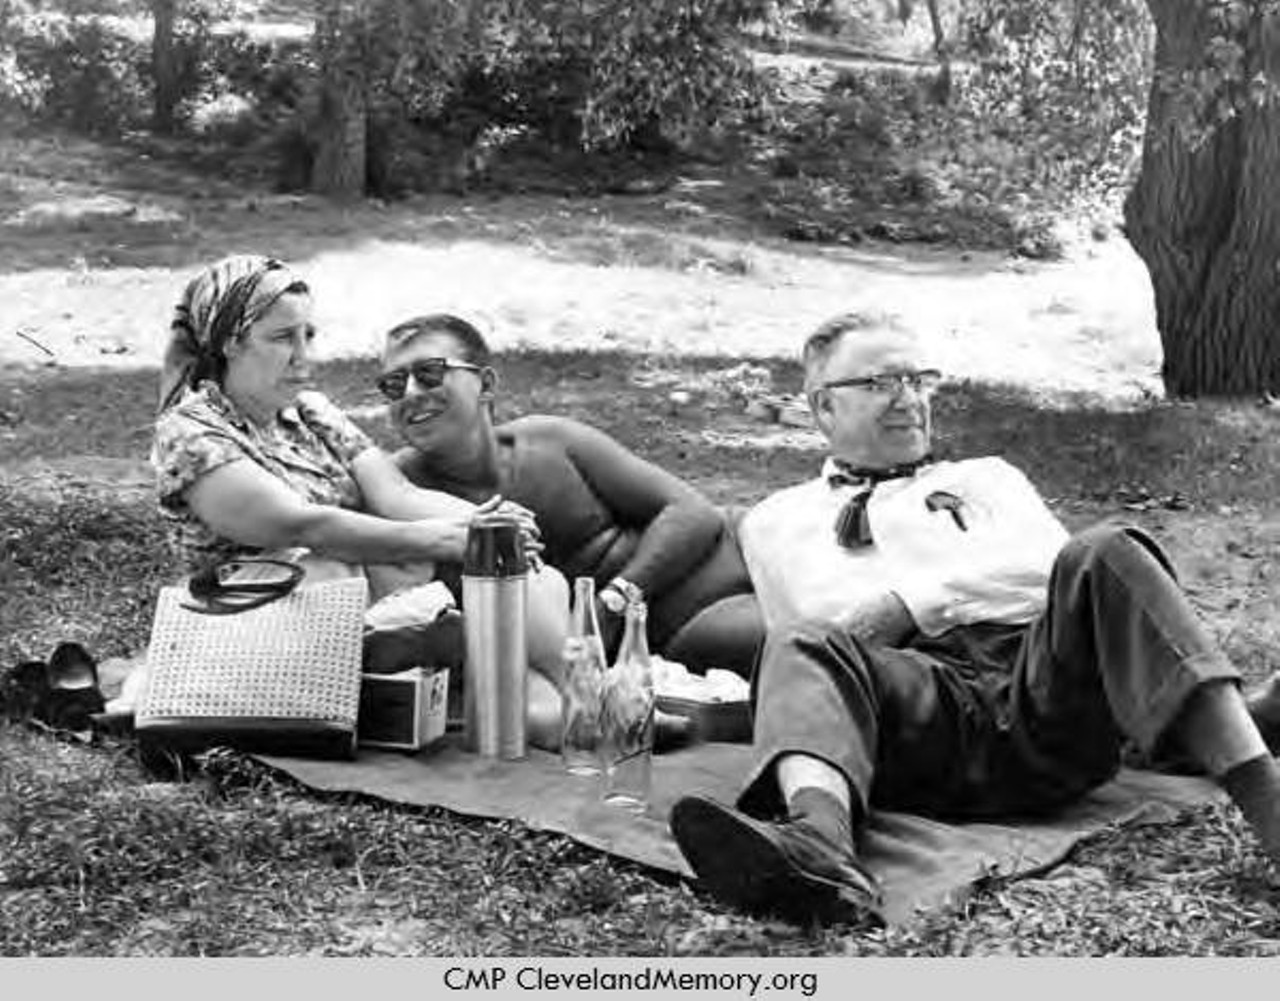 Couple and their son enjoy picnic, 1961